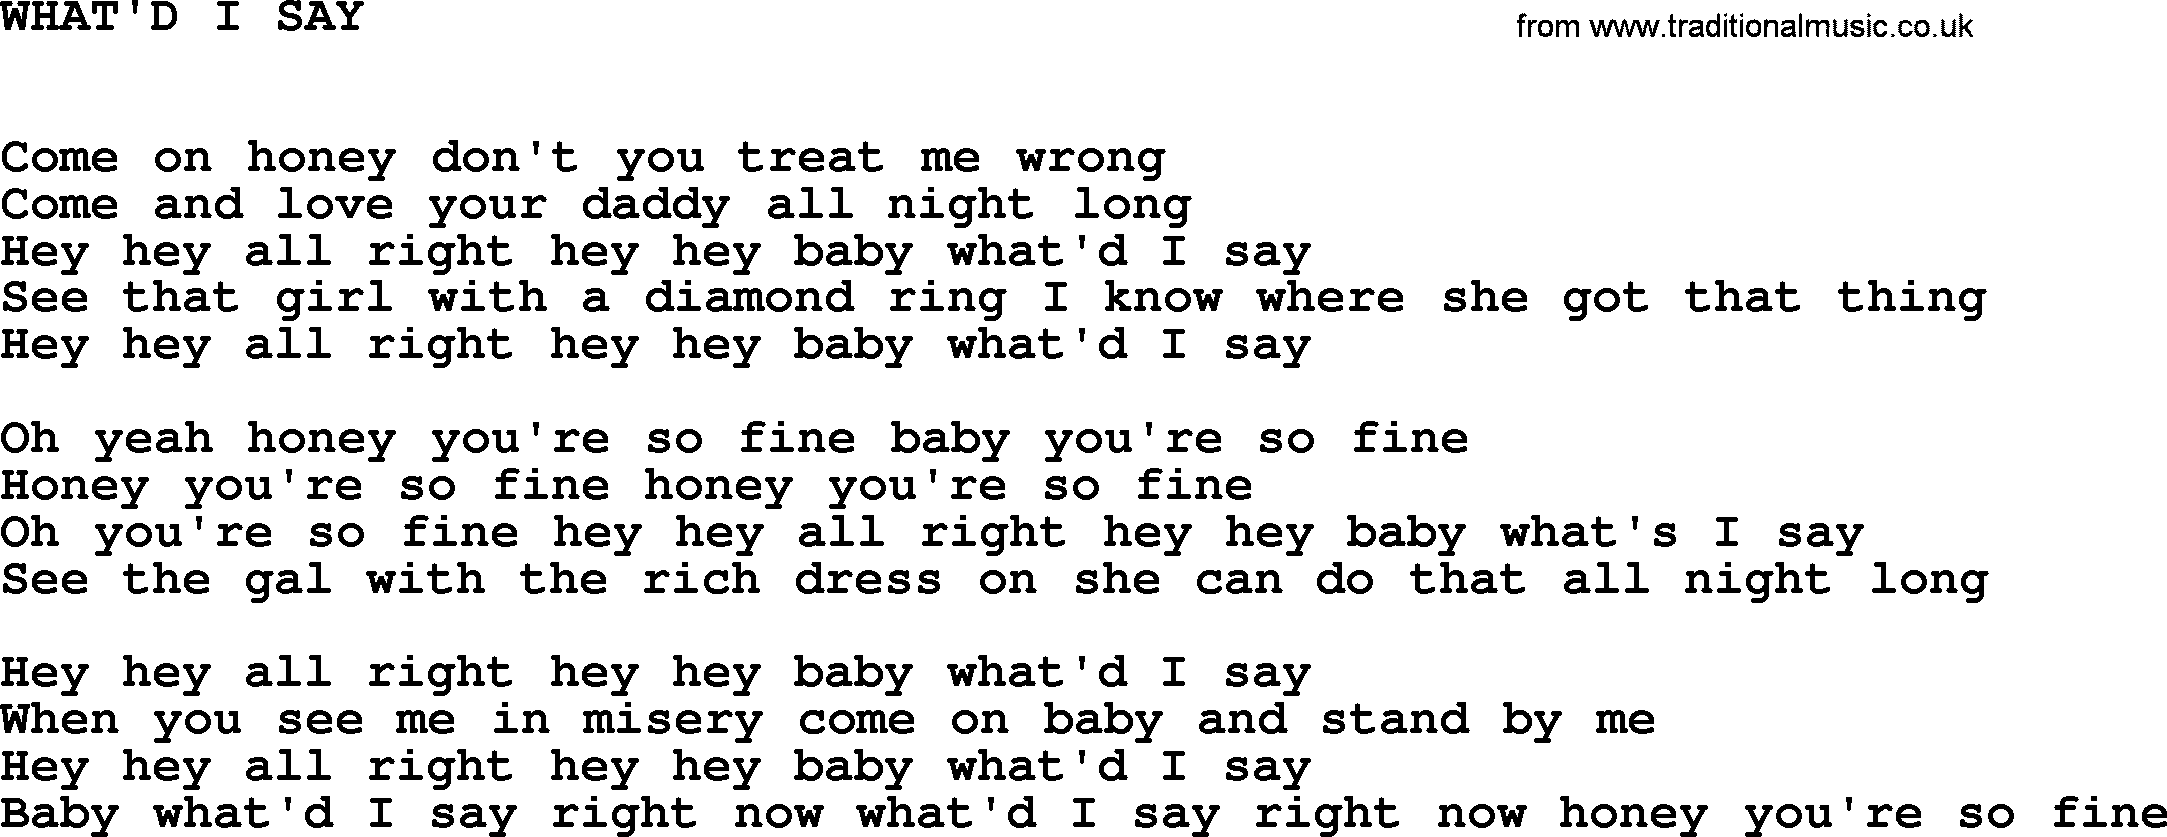 Johnny Cash song What'd I Say.txt lyrics